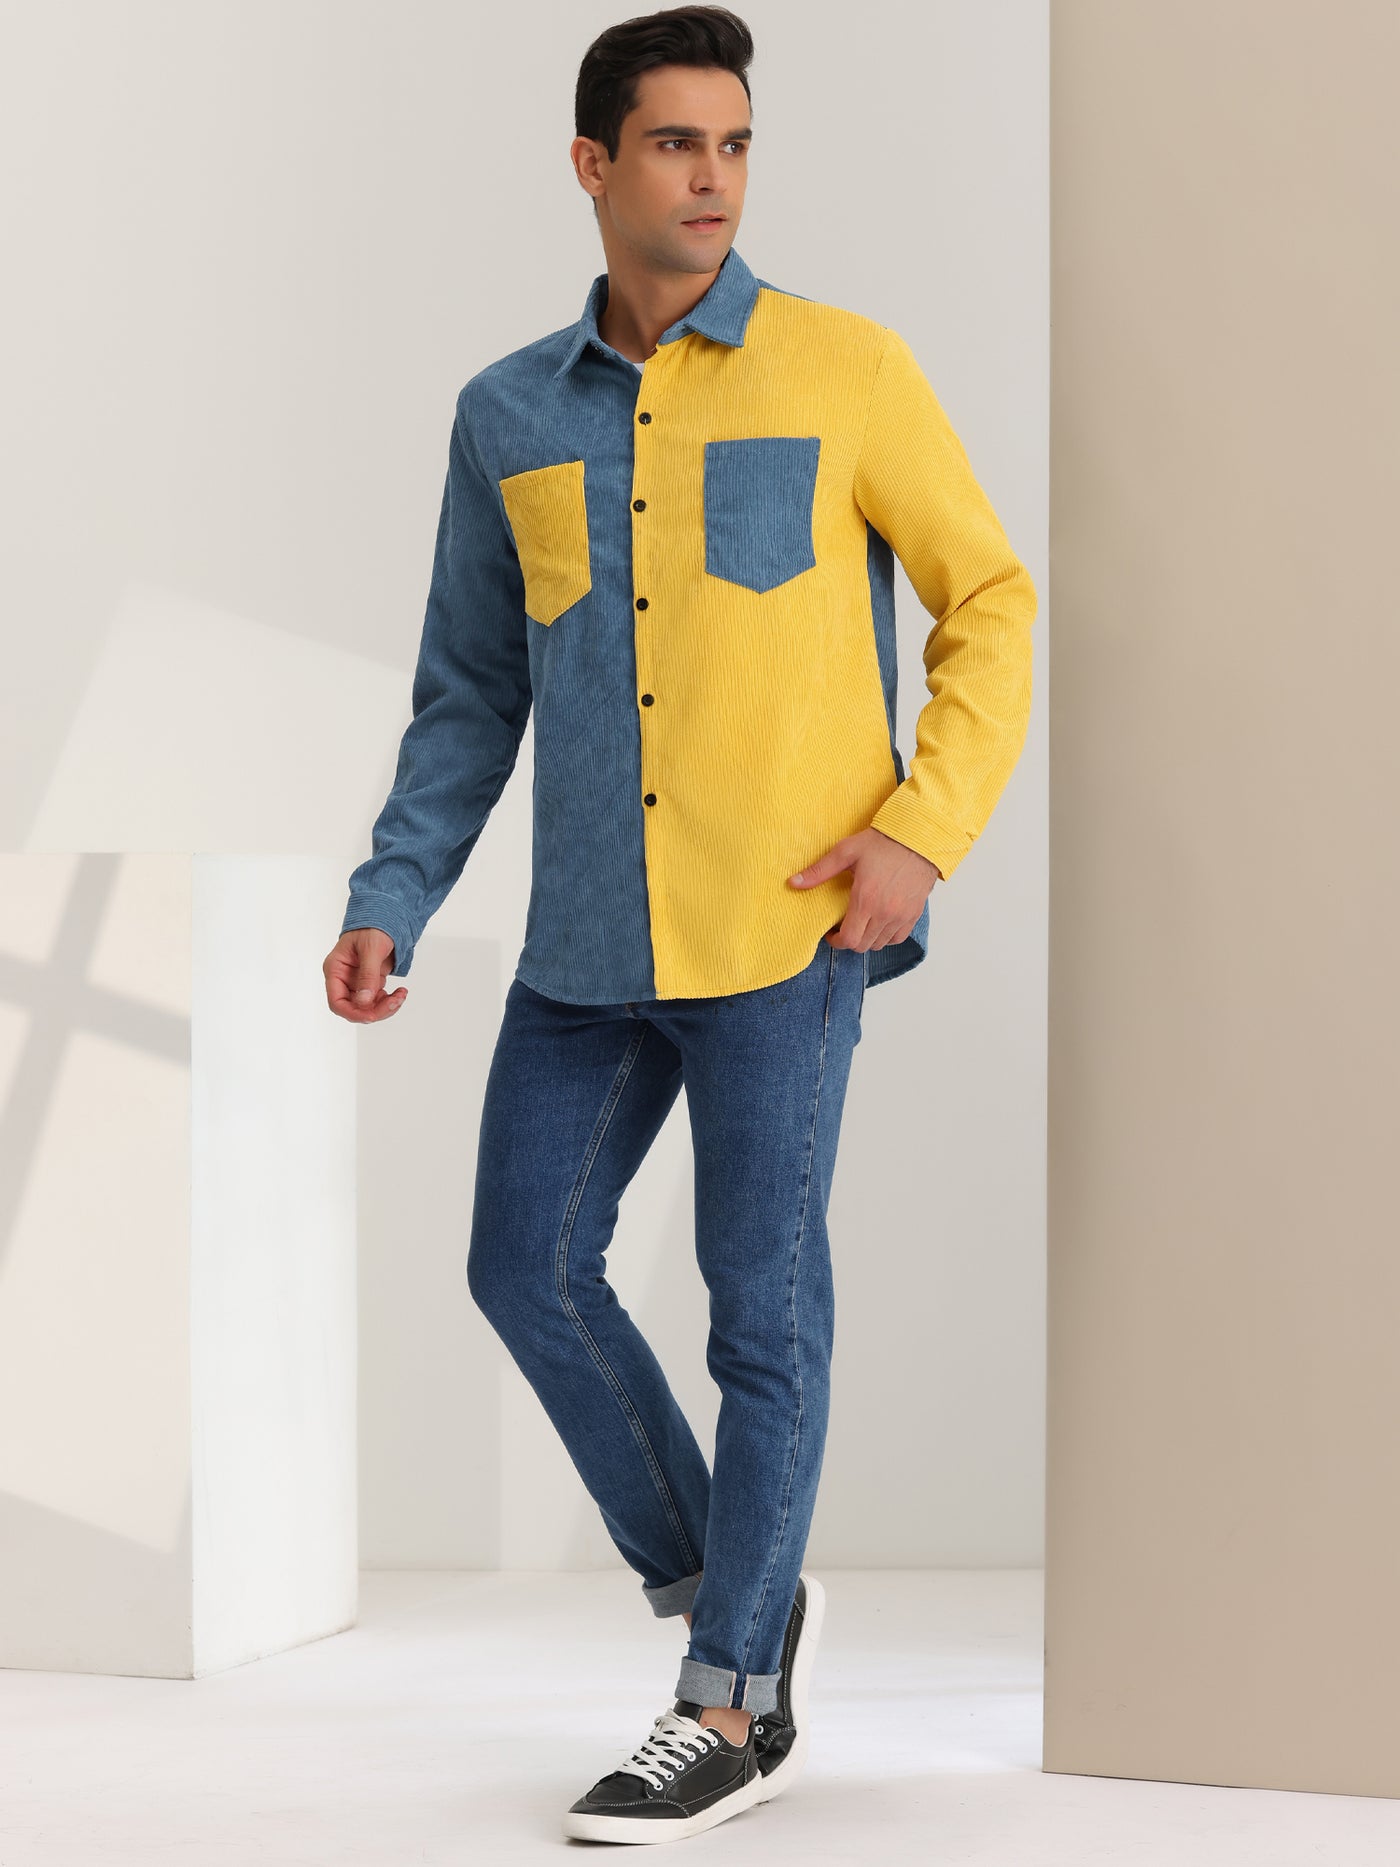 Bublédon Men's Corduroy Shirt Long Sleeves Button Down Color Block Patchwork Shirts